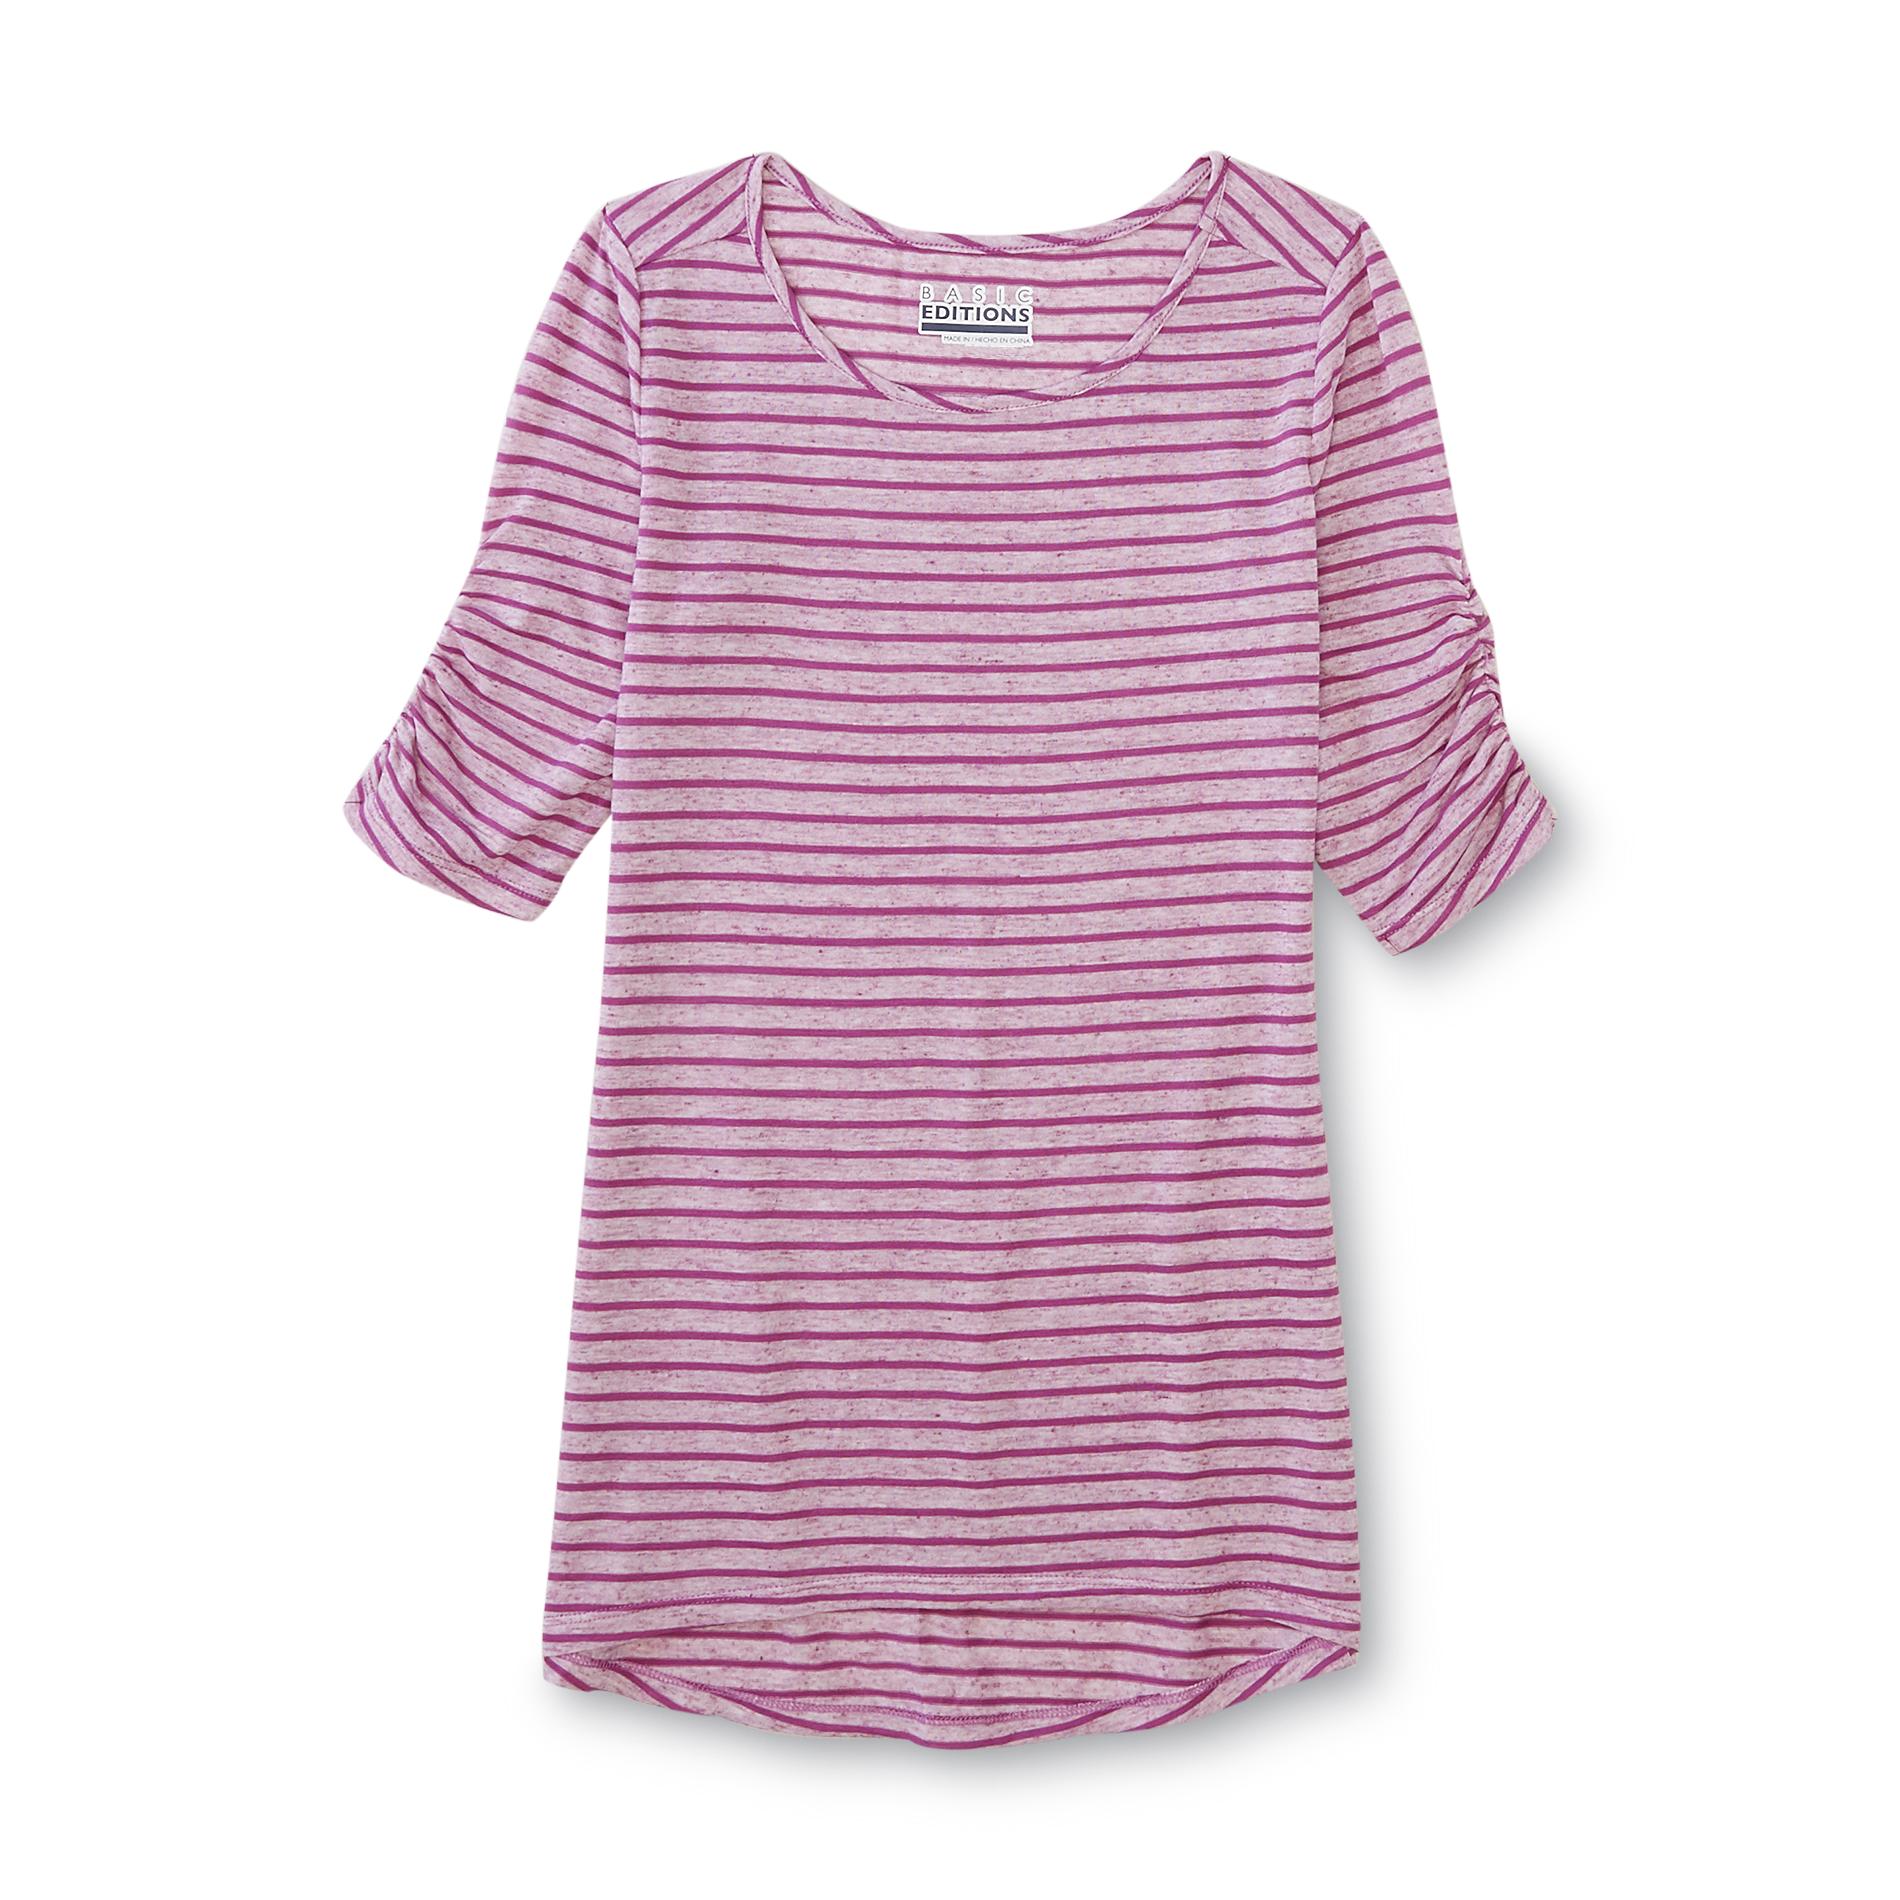 Basic Editions Girl's Slub Knit Top - Striped